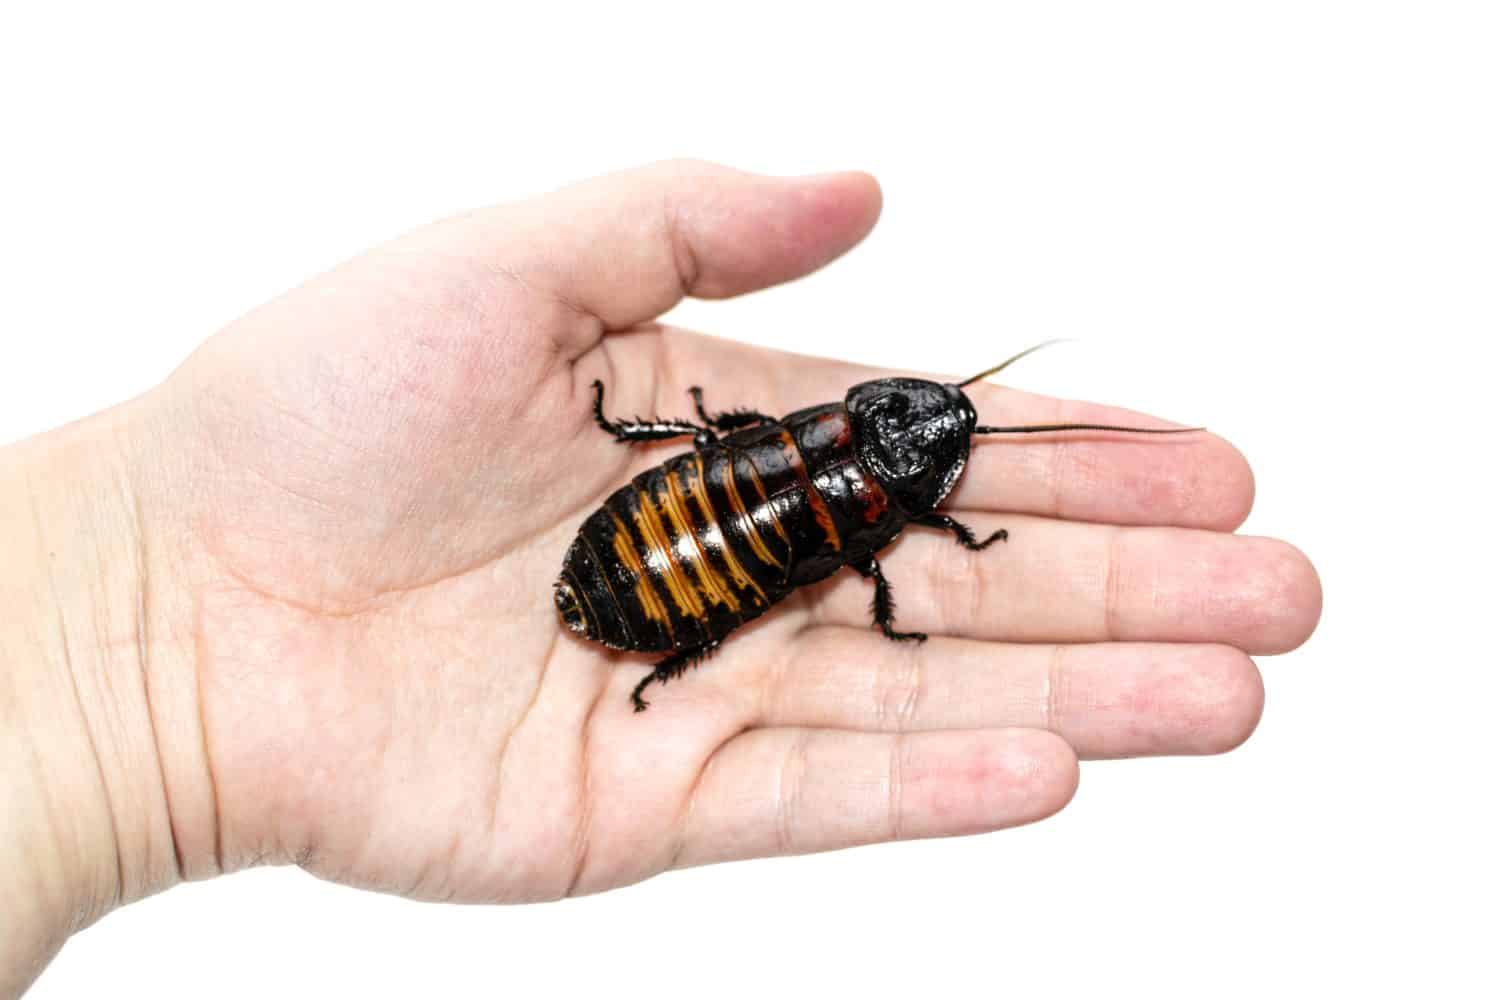 Beautiful huge Madagascar Hissing Cockroach crawls on human hand